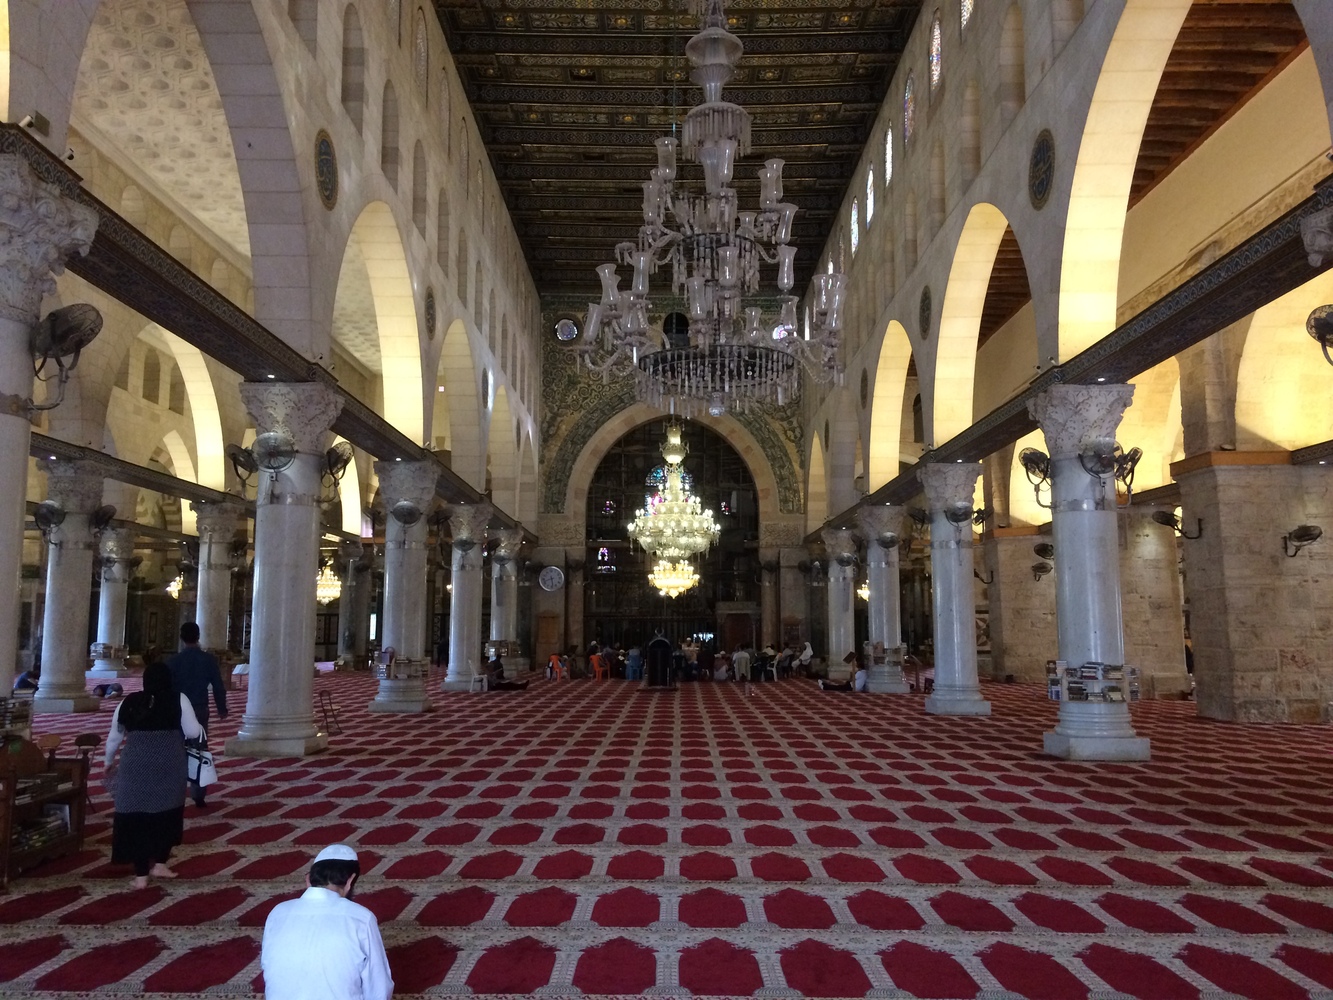 inside view of the Al Aqsa Mosque